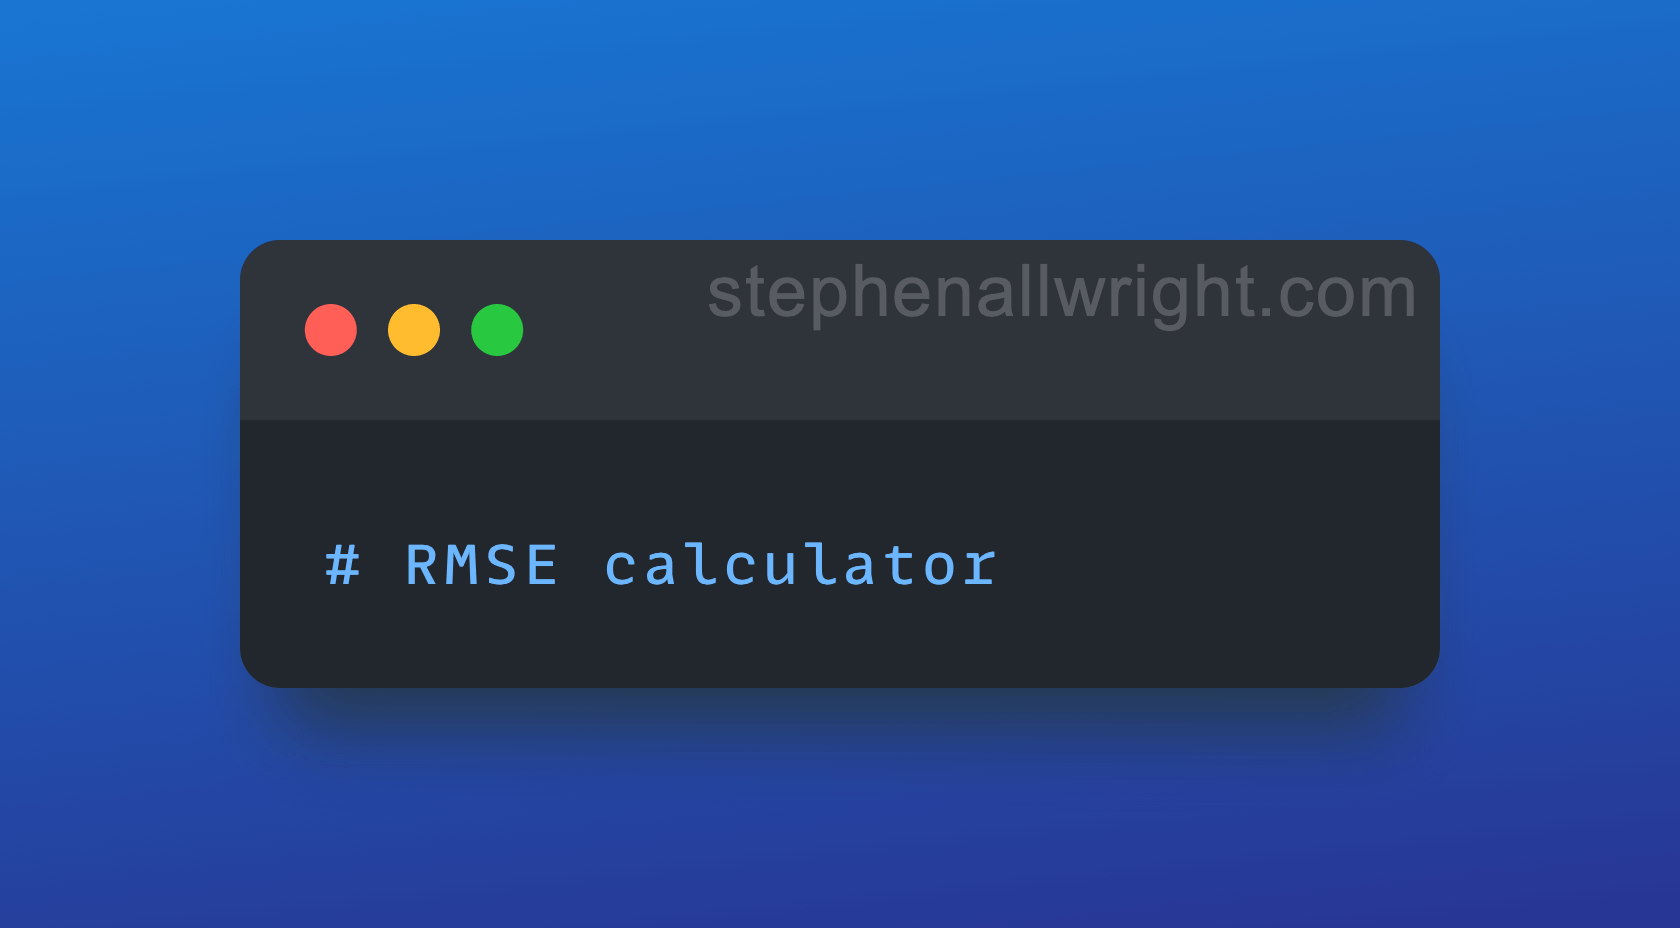 RMSE Calculator (Root Mean Square Error)